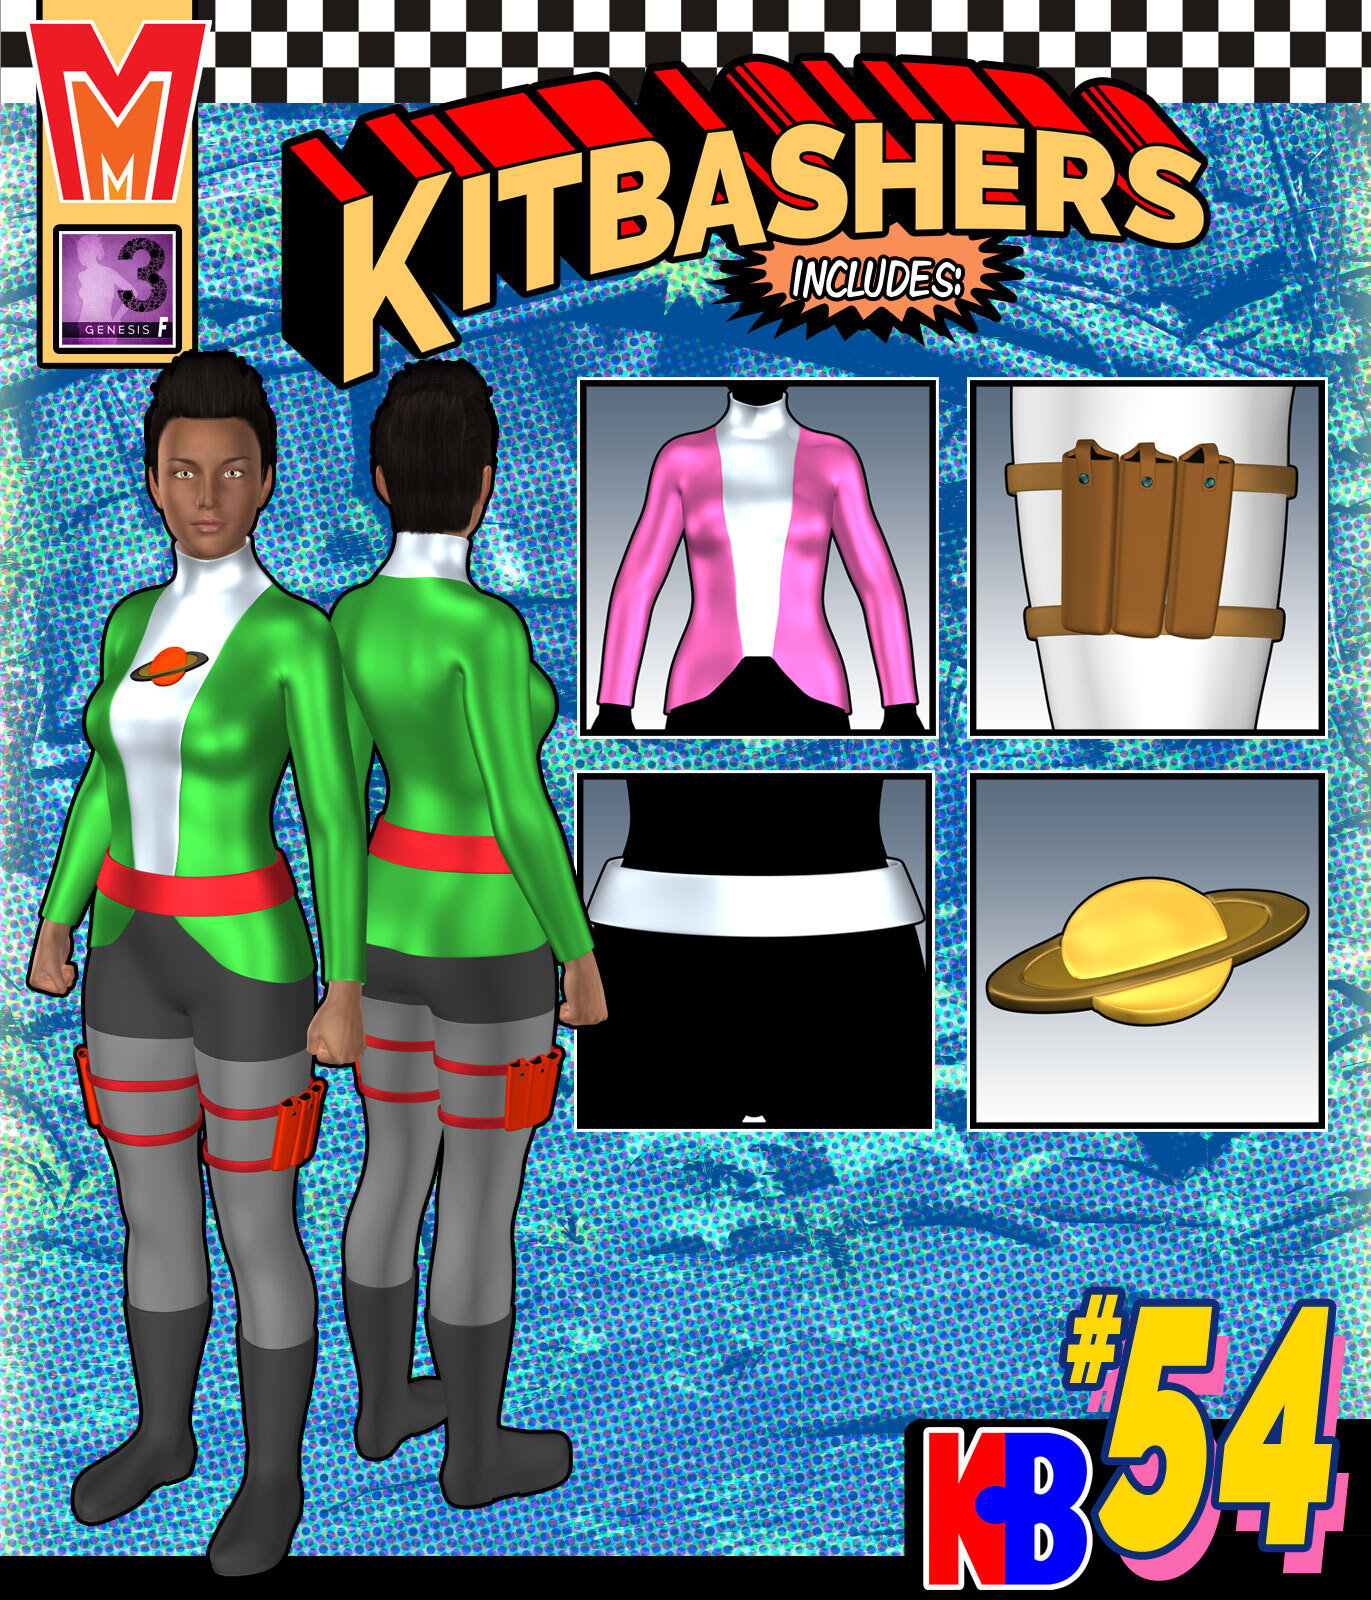 Kitbashers 054 MMG3F by: MightyMite, 3D Models by Daz 3D